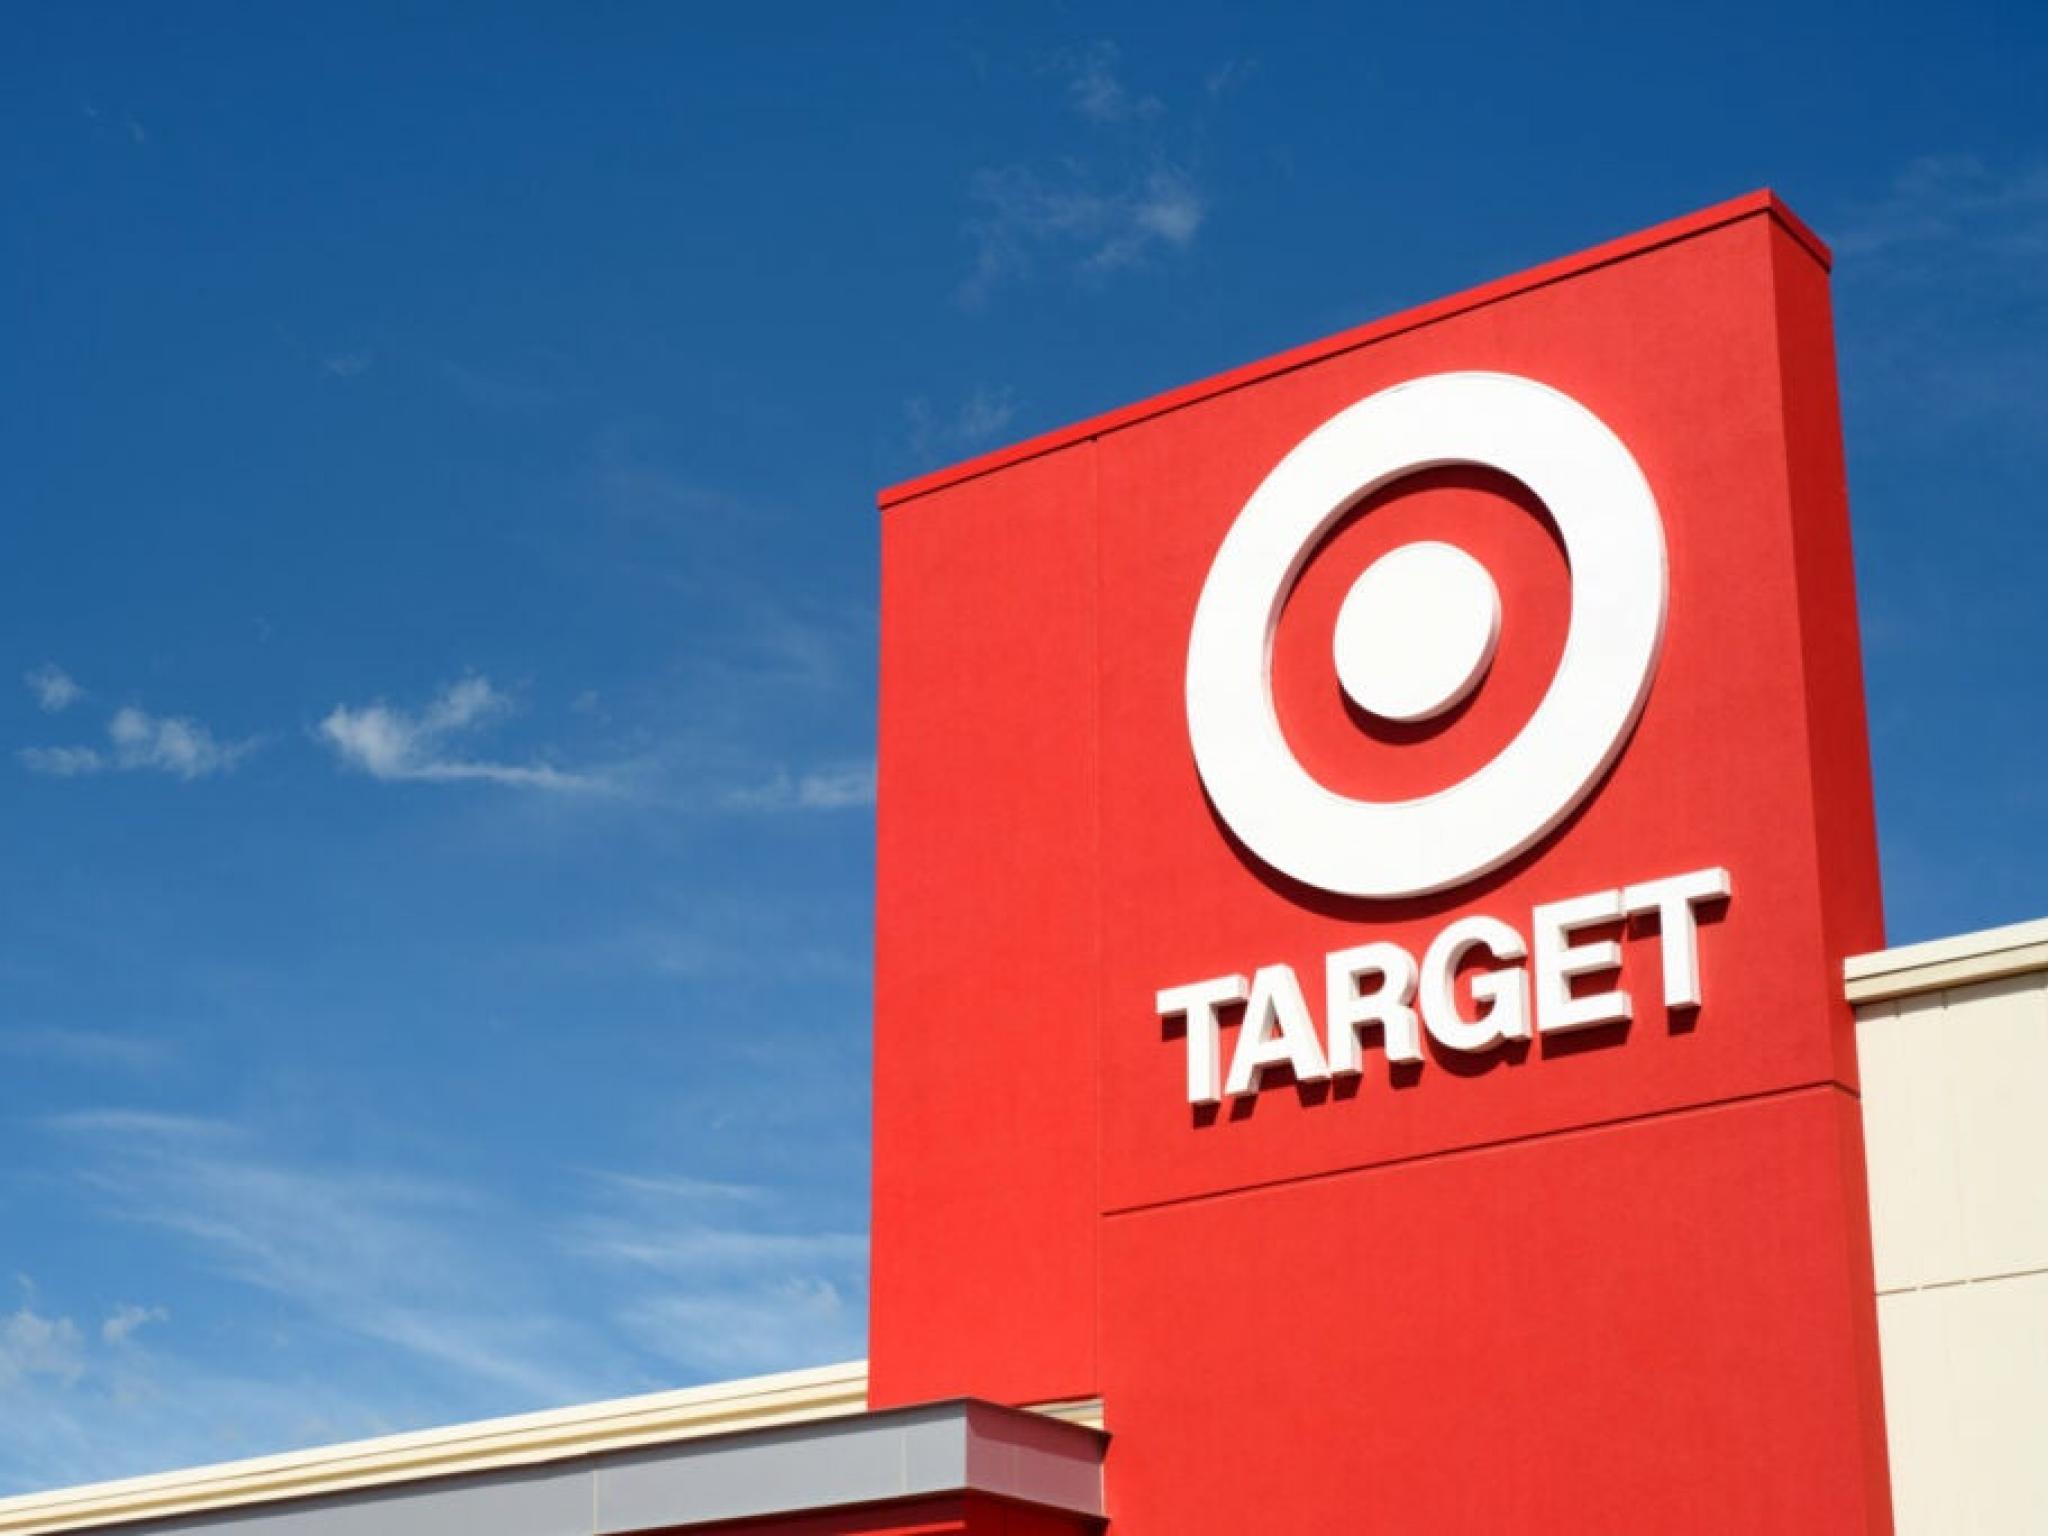  target-blames-strain-on-consumer-wallet-for-tough-quarter 